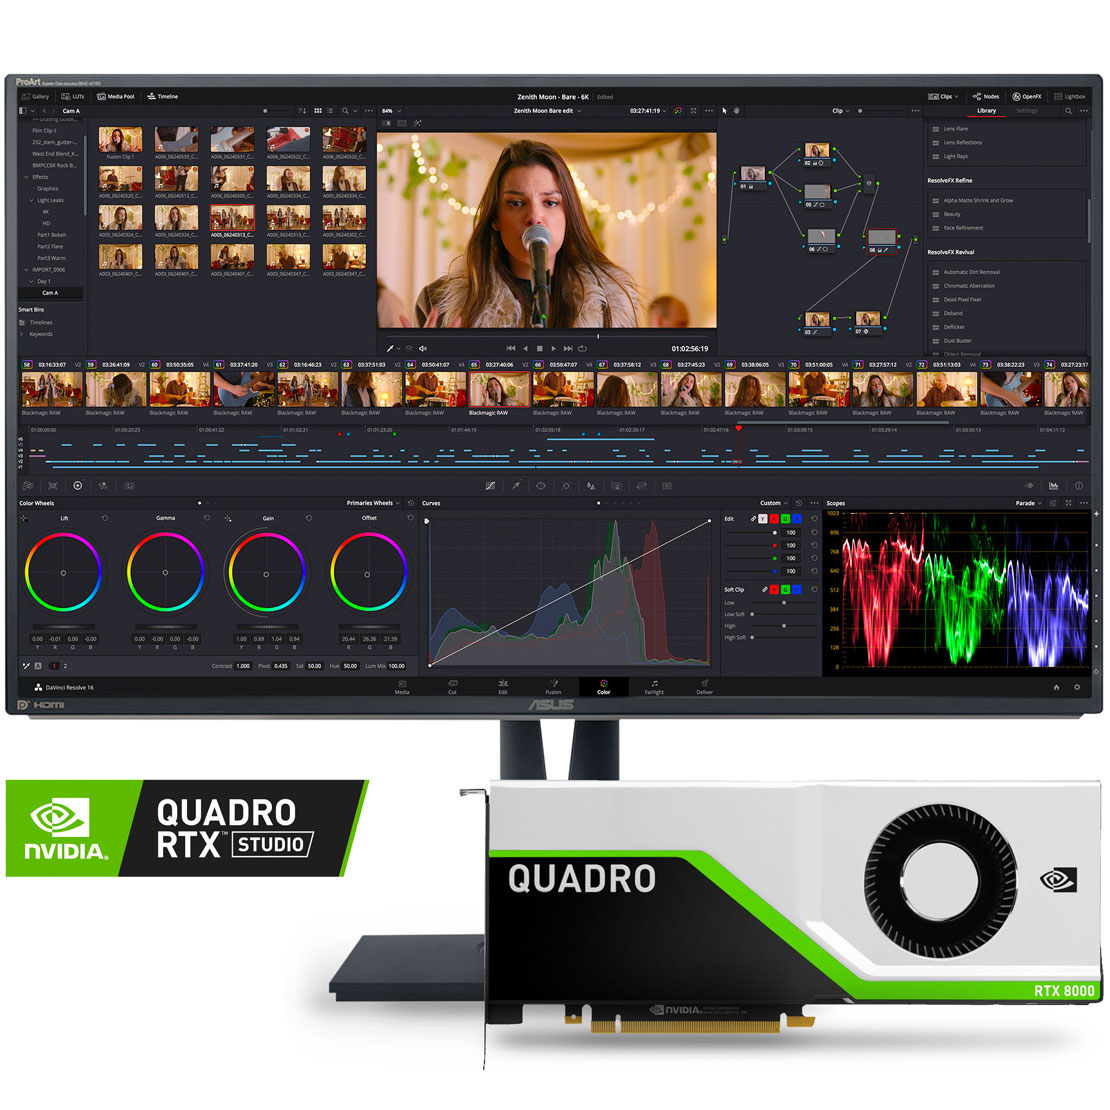 Video Editing Software running with Quadro RTX Studio